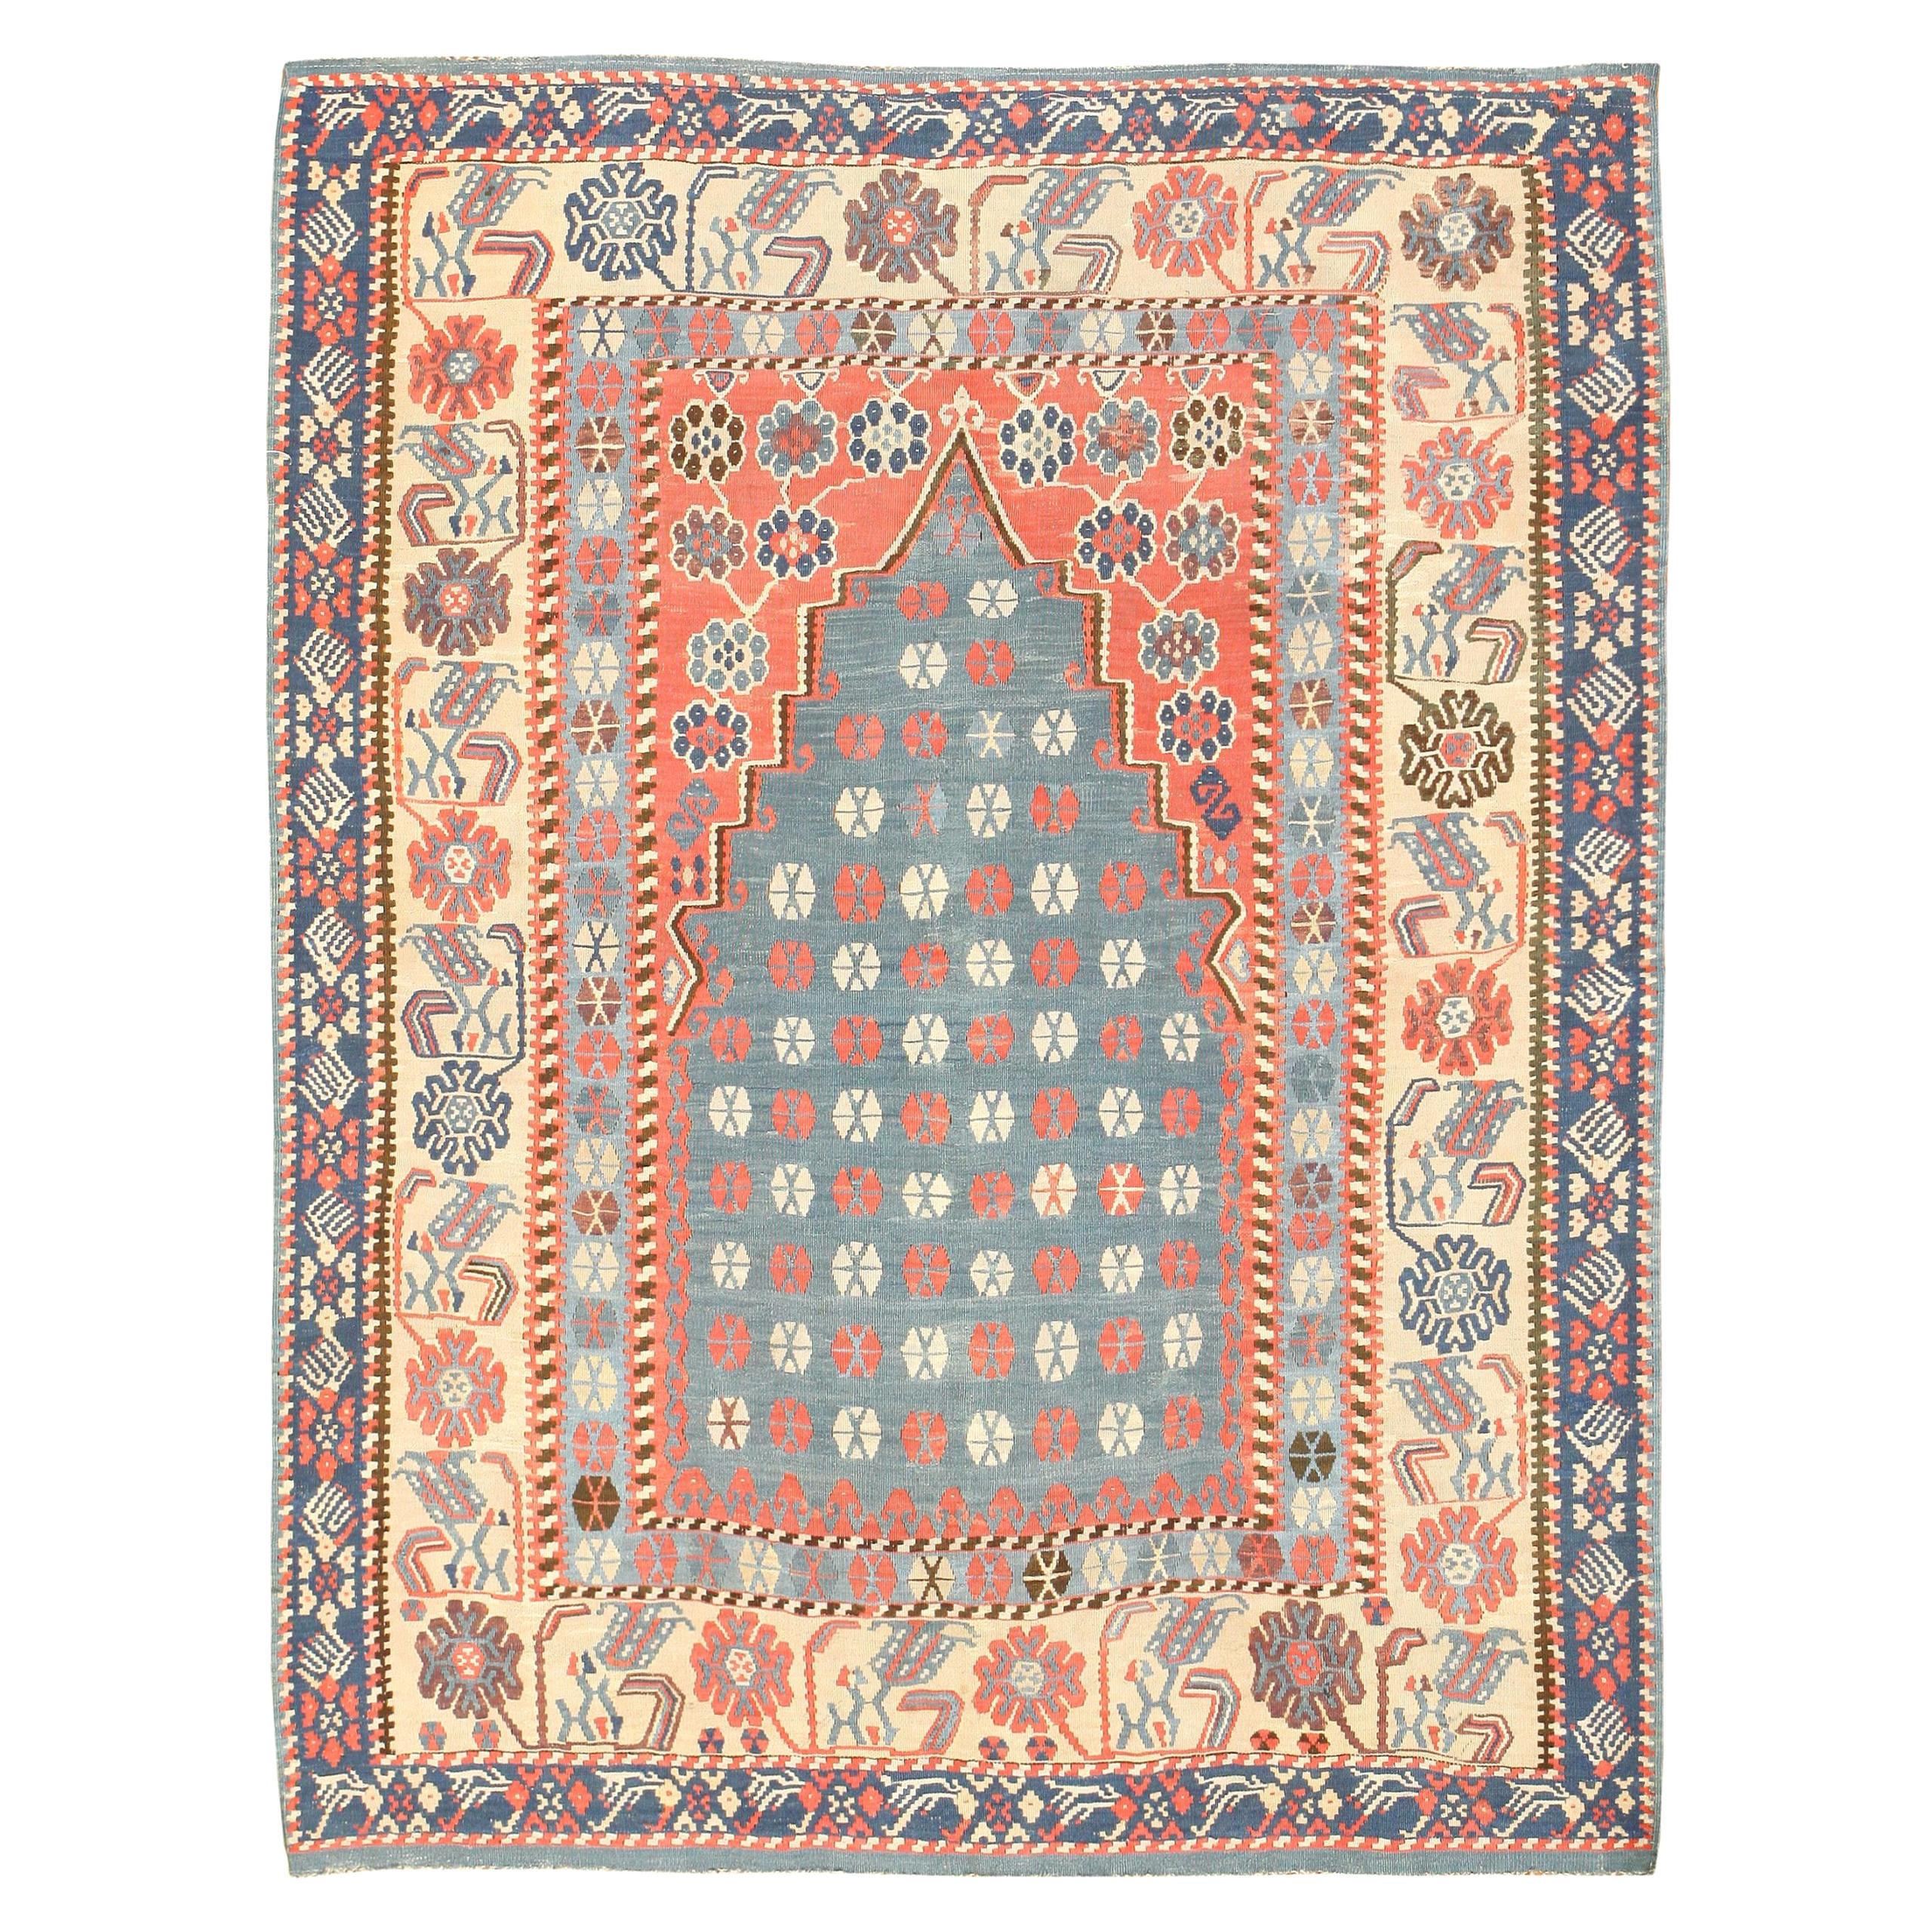 Antique Turkish Prayer Design Kilim Rug. Size: 4 ft 3 in x 5 ft 4 in